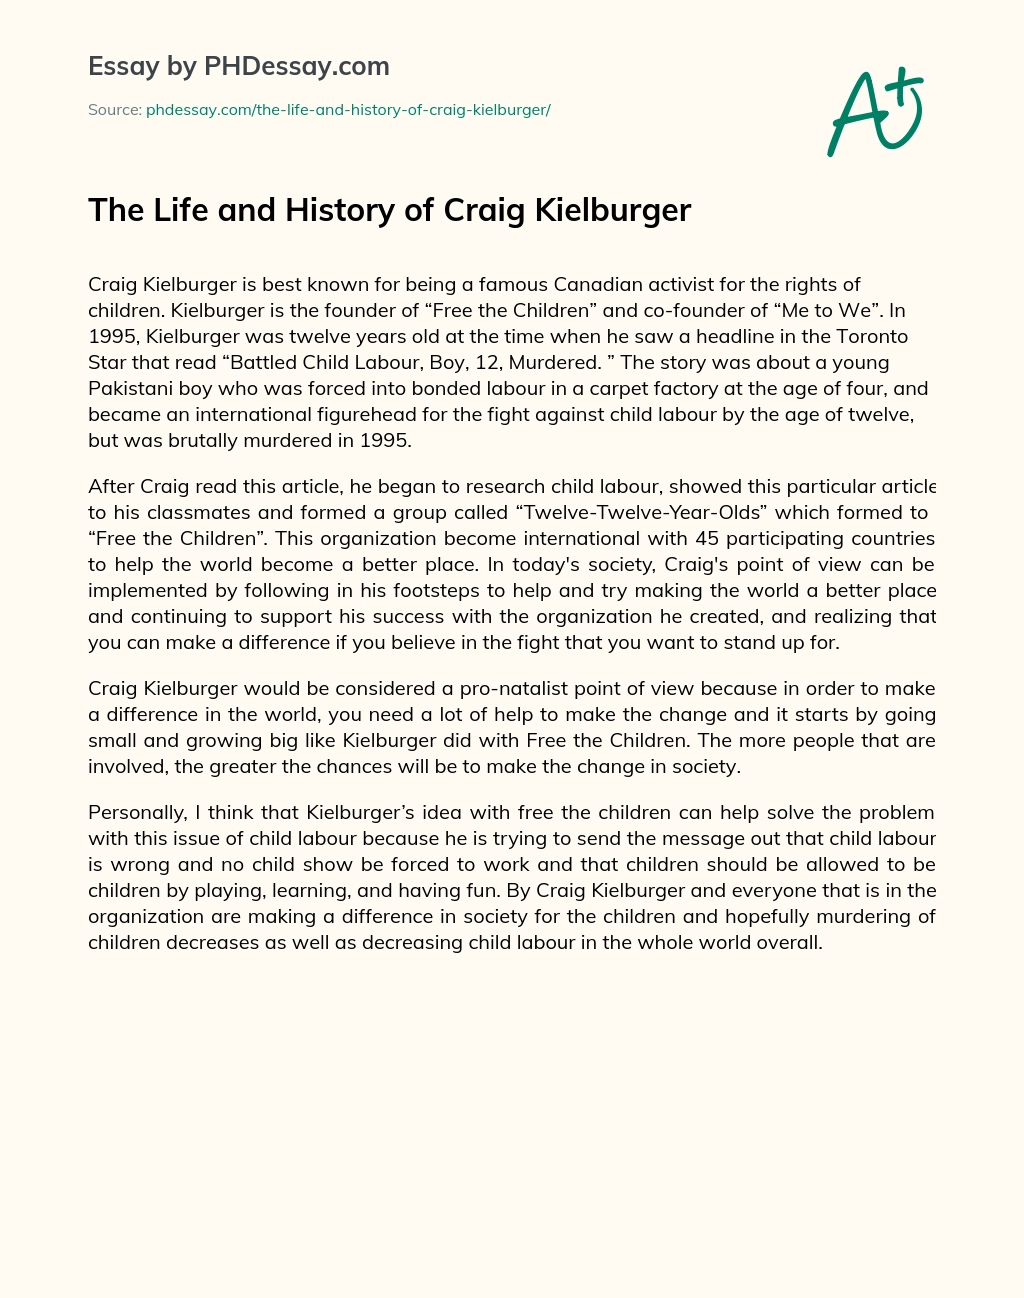 The Life and History of Craig Kielburger essay